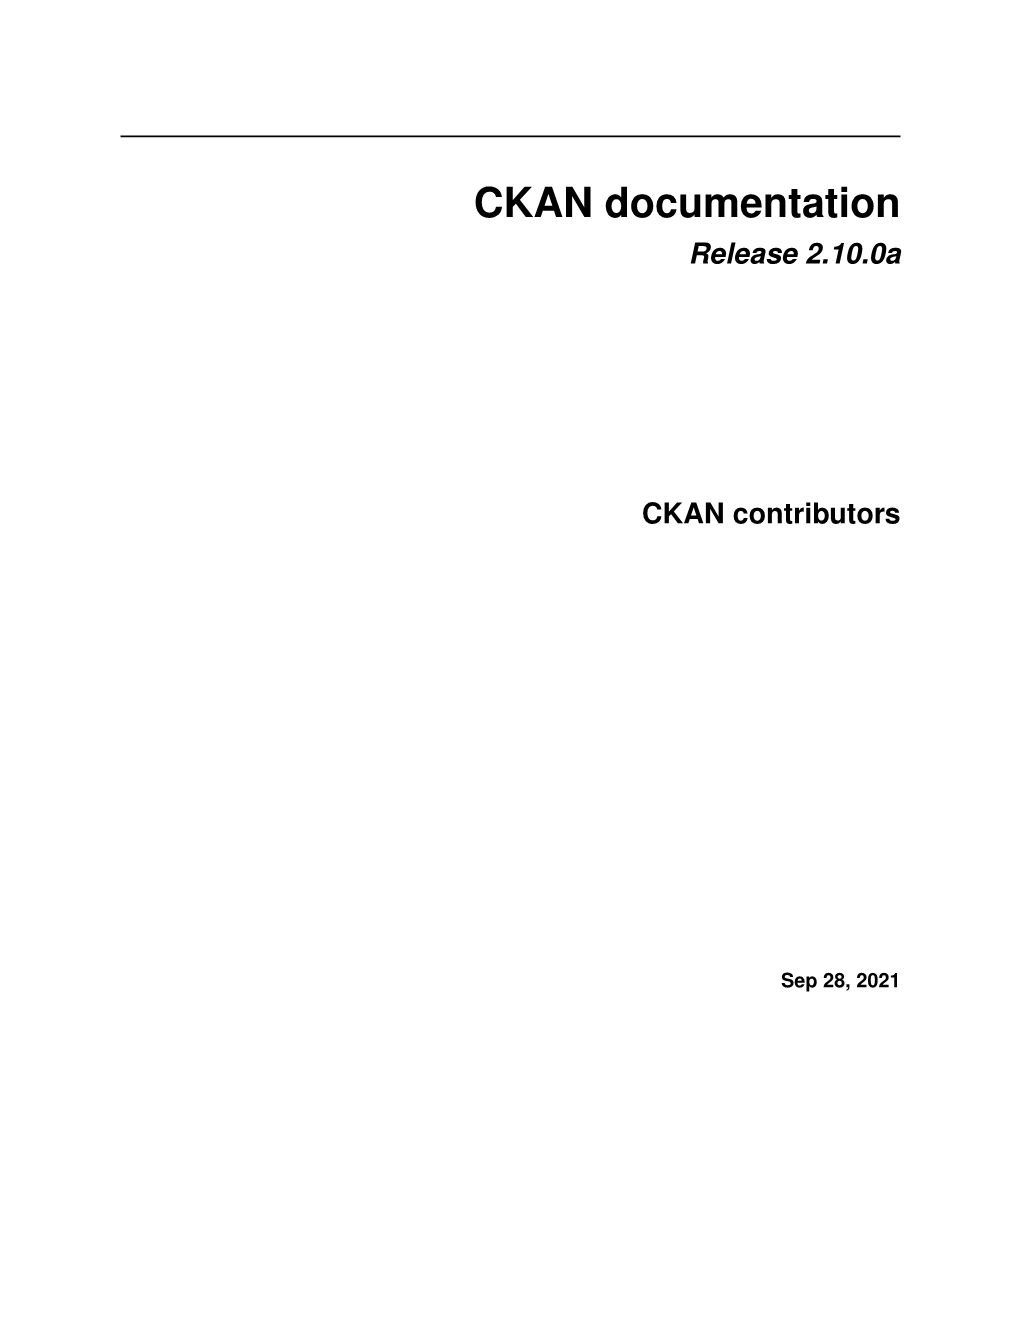 Latest Stable Release of CKAN (CKAN B’2.9.4’), Run: Pip Install -E 'Git+